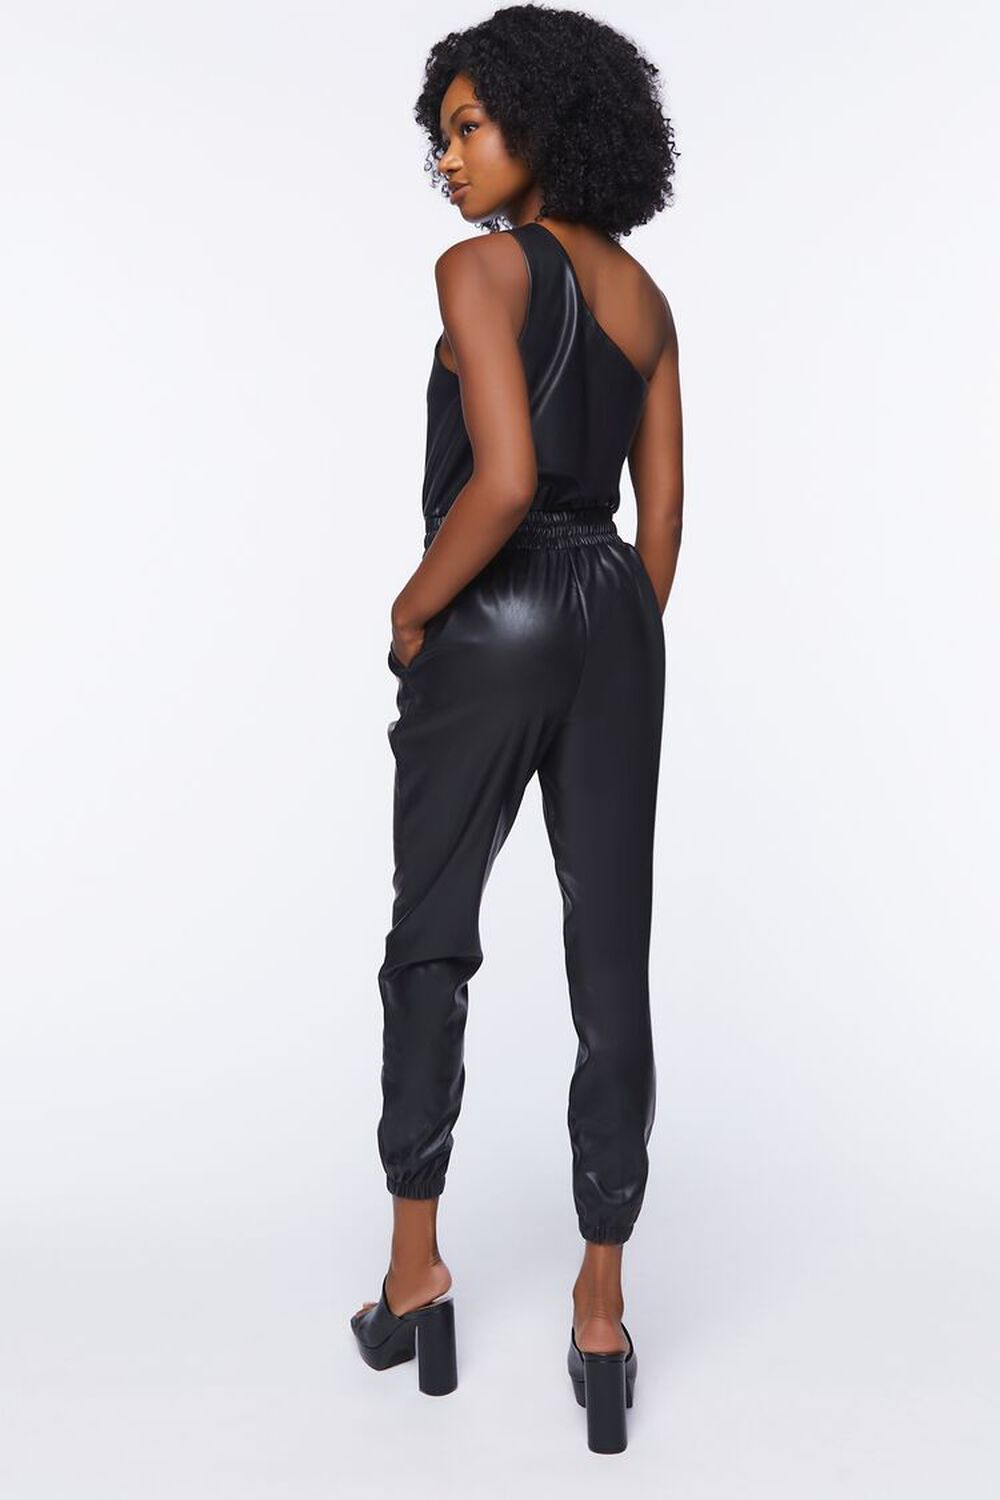 BLACK Faux Leather One-Shoulder Jumpsuit, image 3